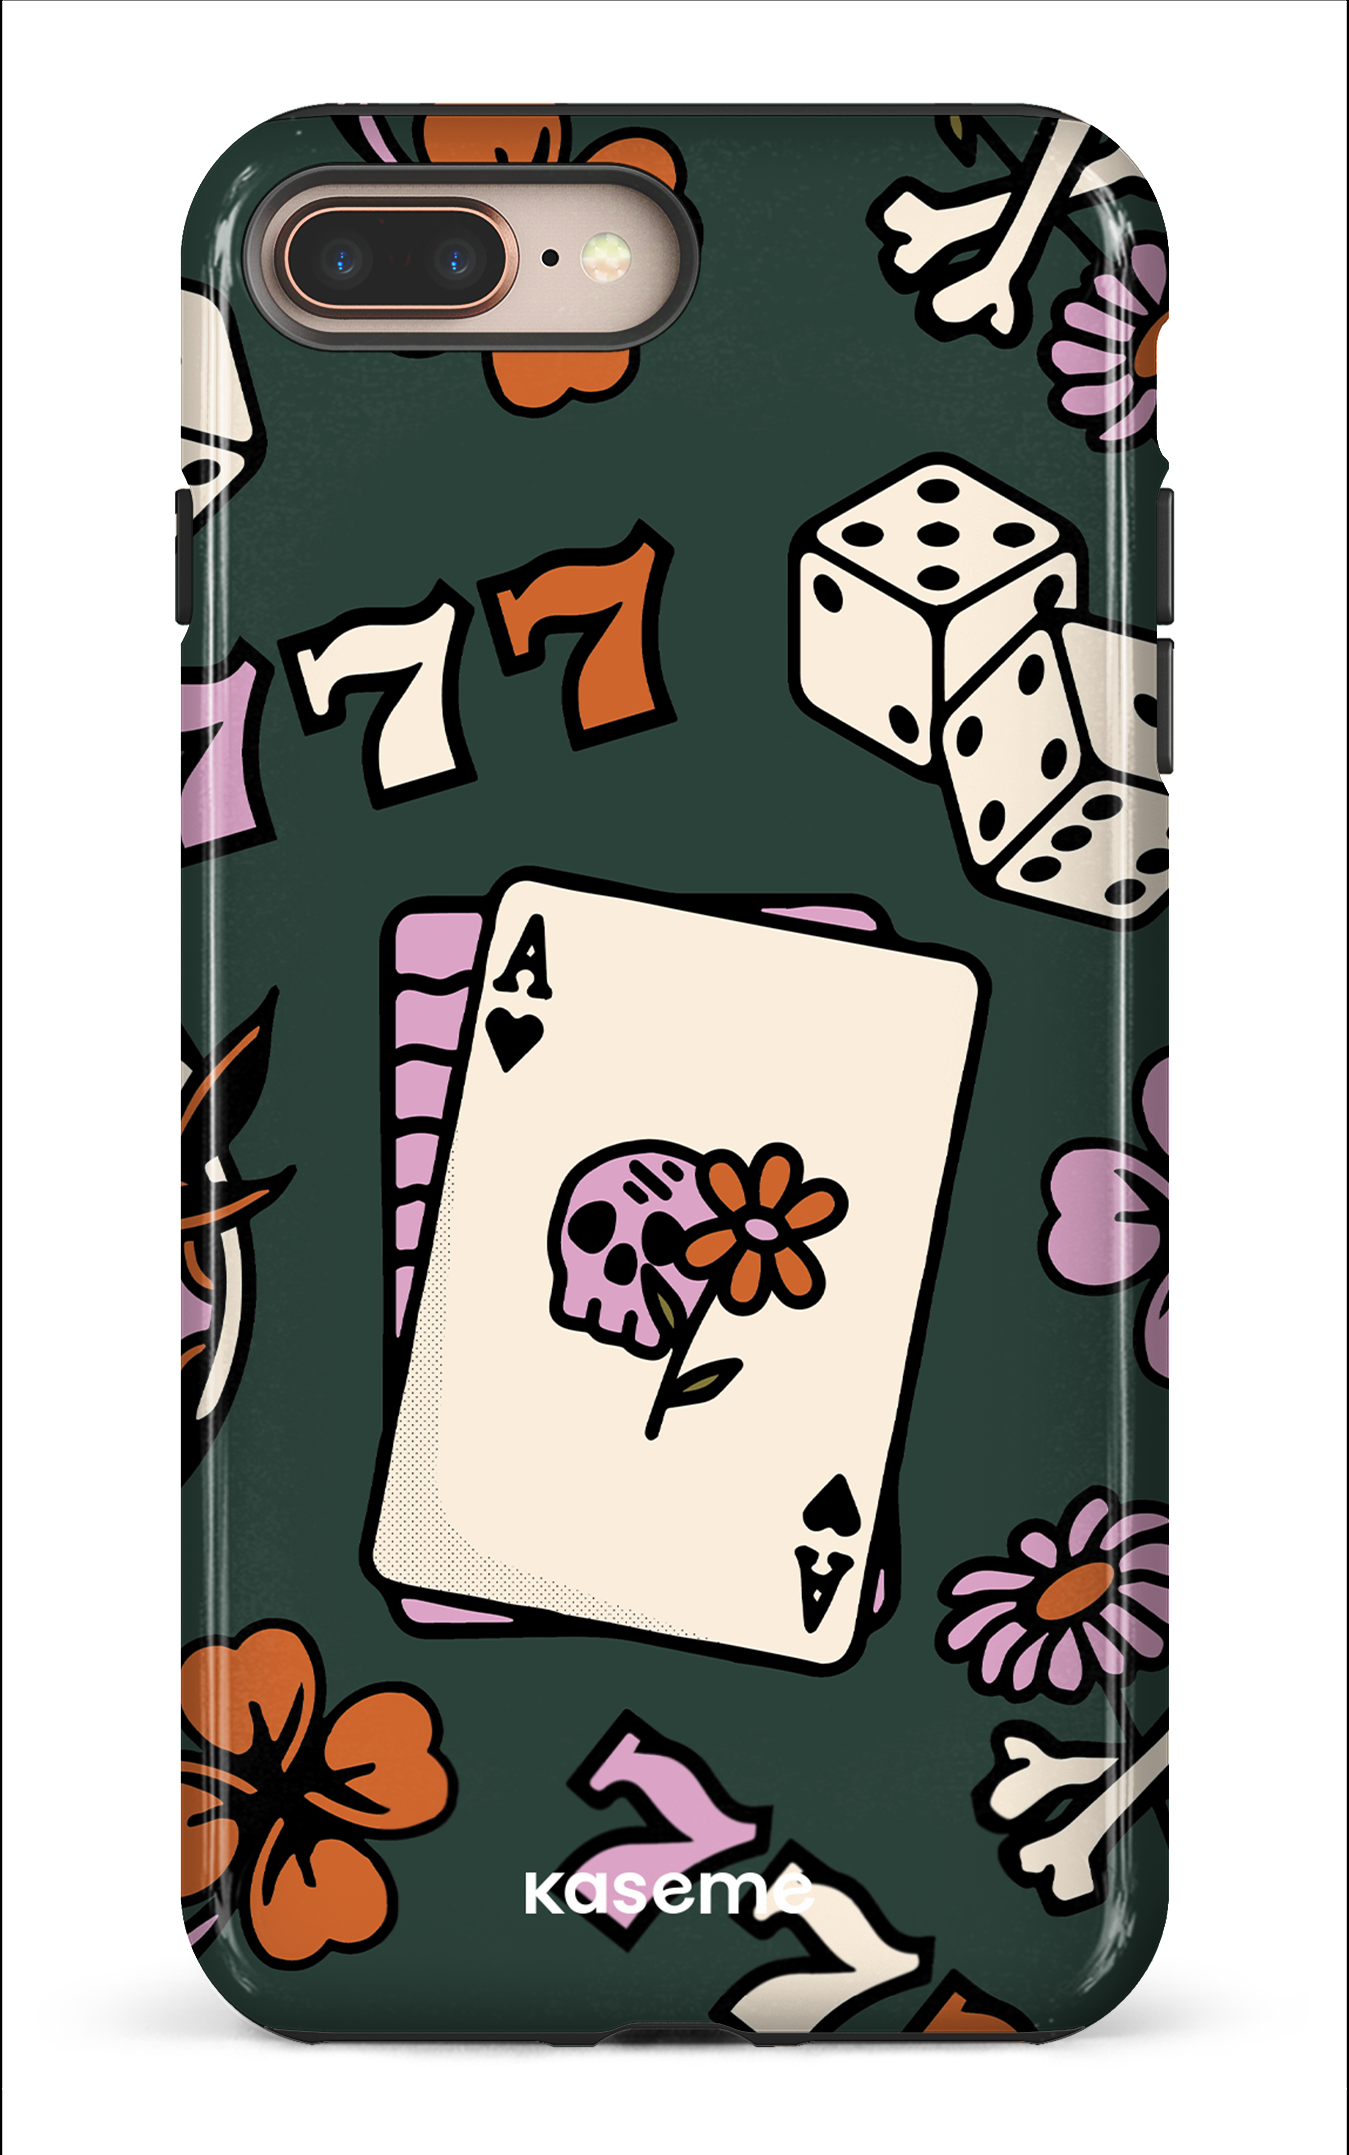 Poker Face - iPhone 8 Plus